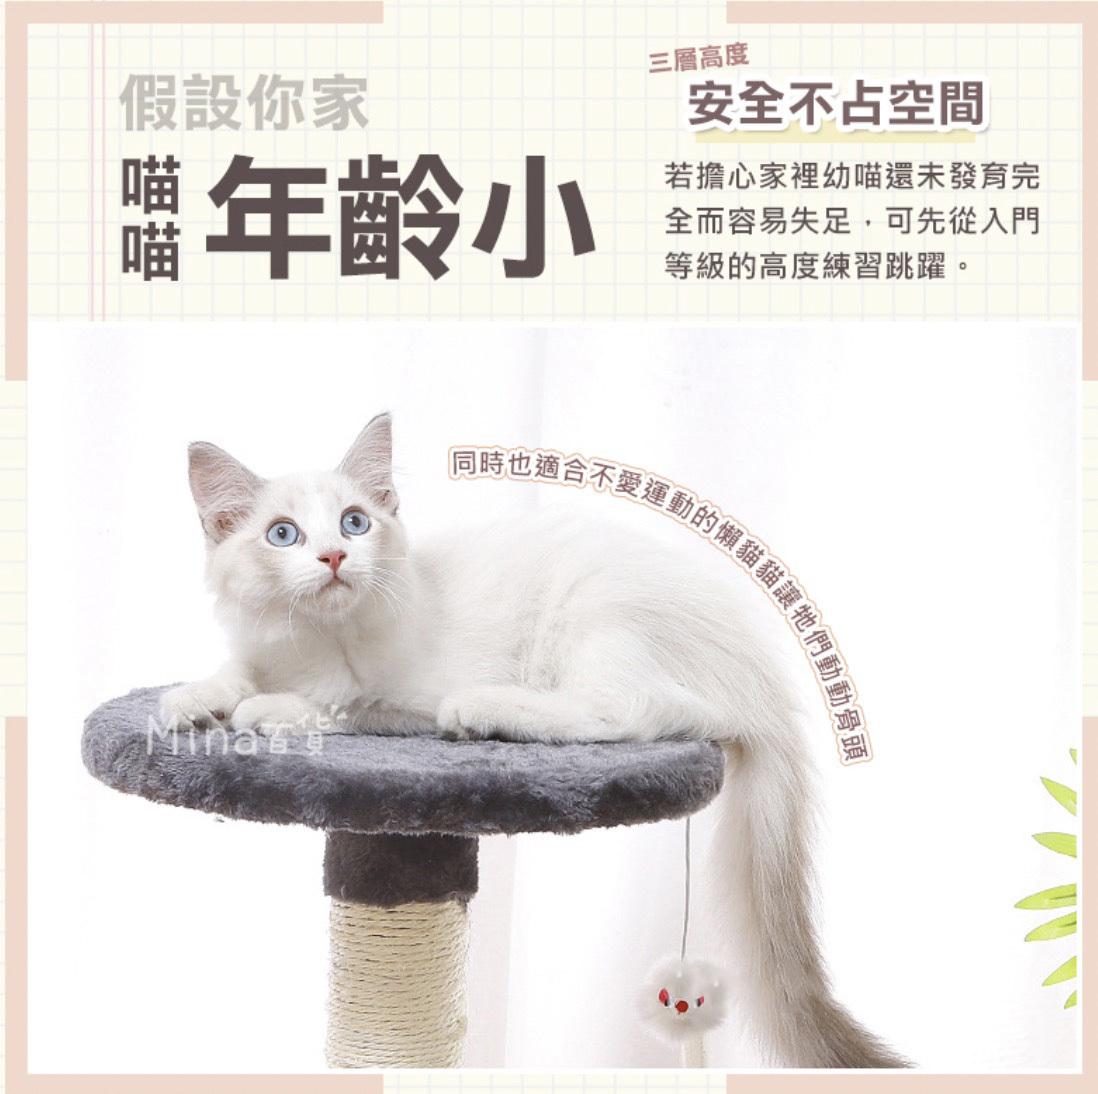 Cat jumping platform, cat springboard, cat scratching post, sisal rope, cat climbing frame, three-layer three-column cat toy, cat paradise jute - gray